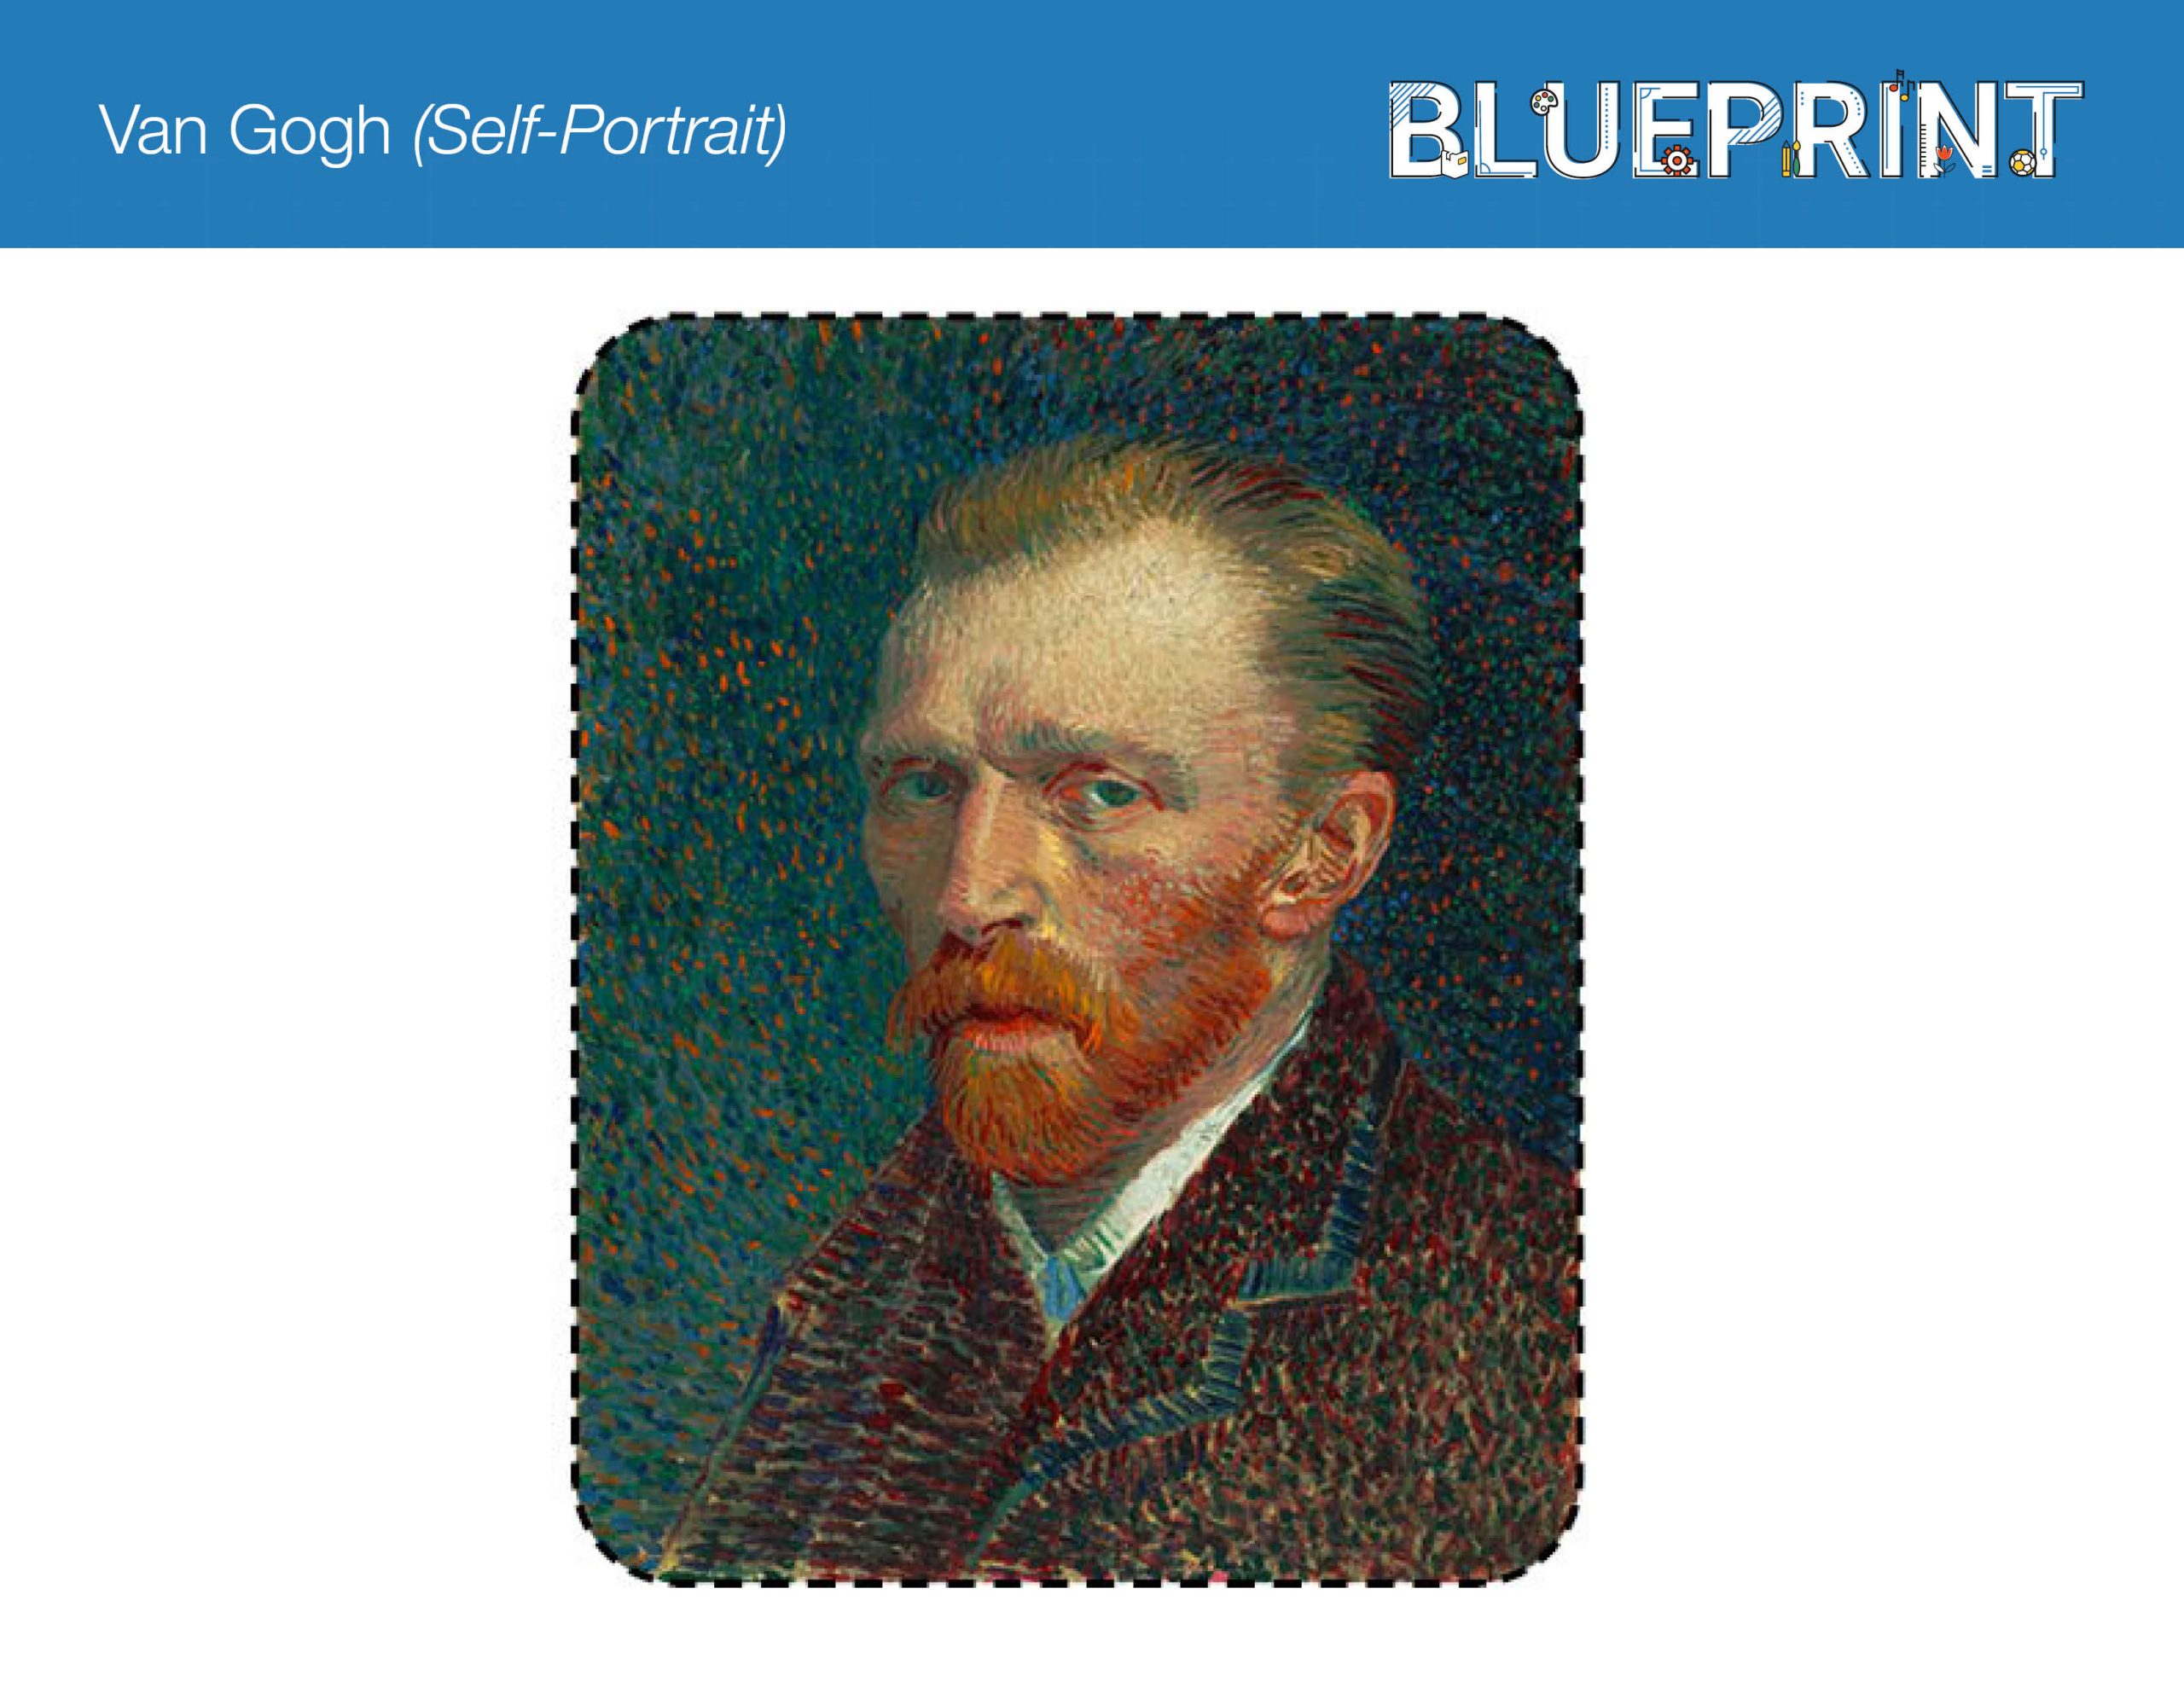 Day 20 - Van Gogh